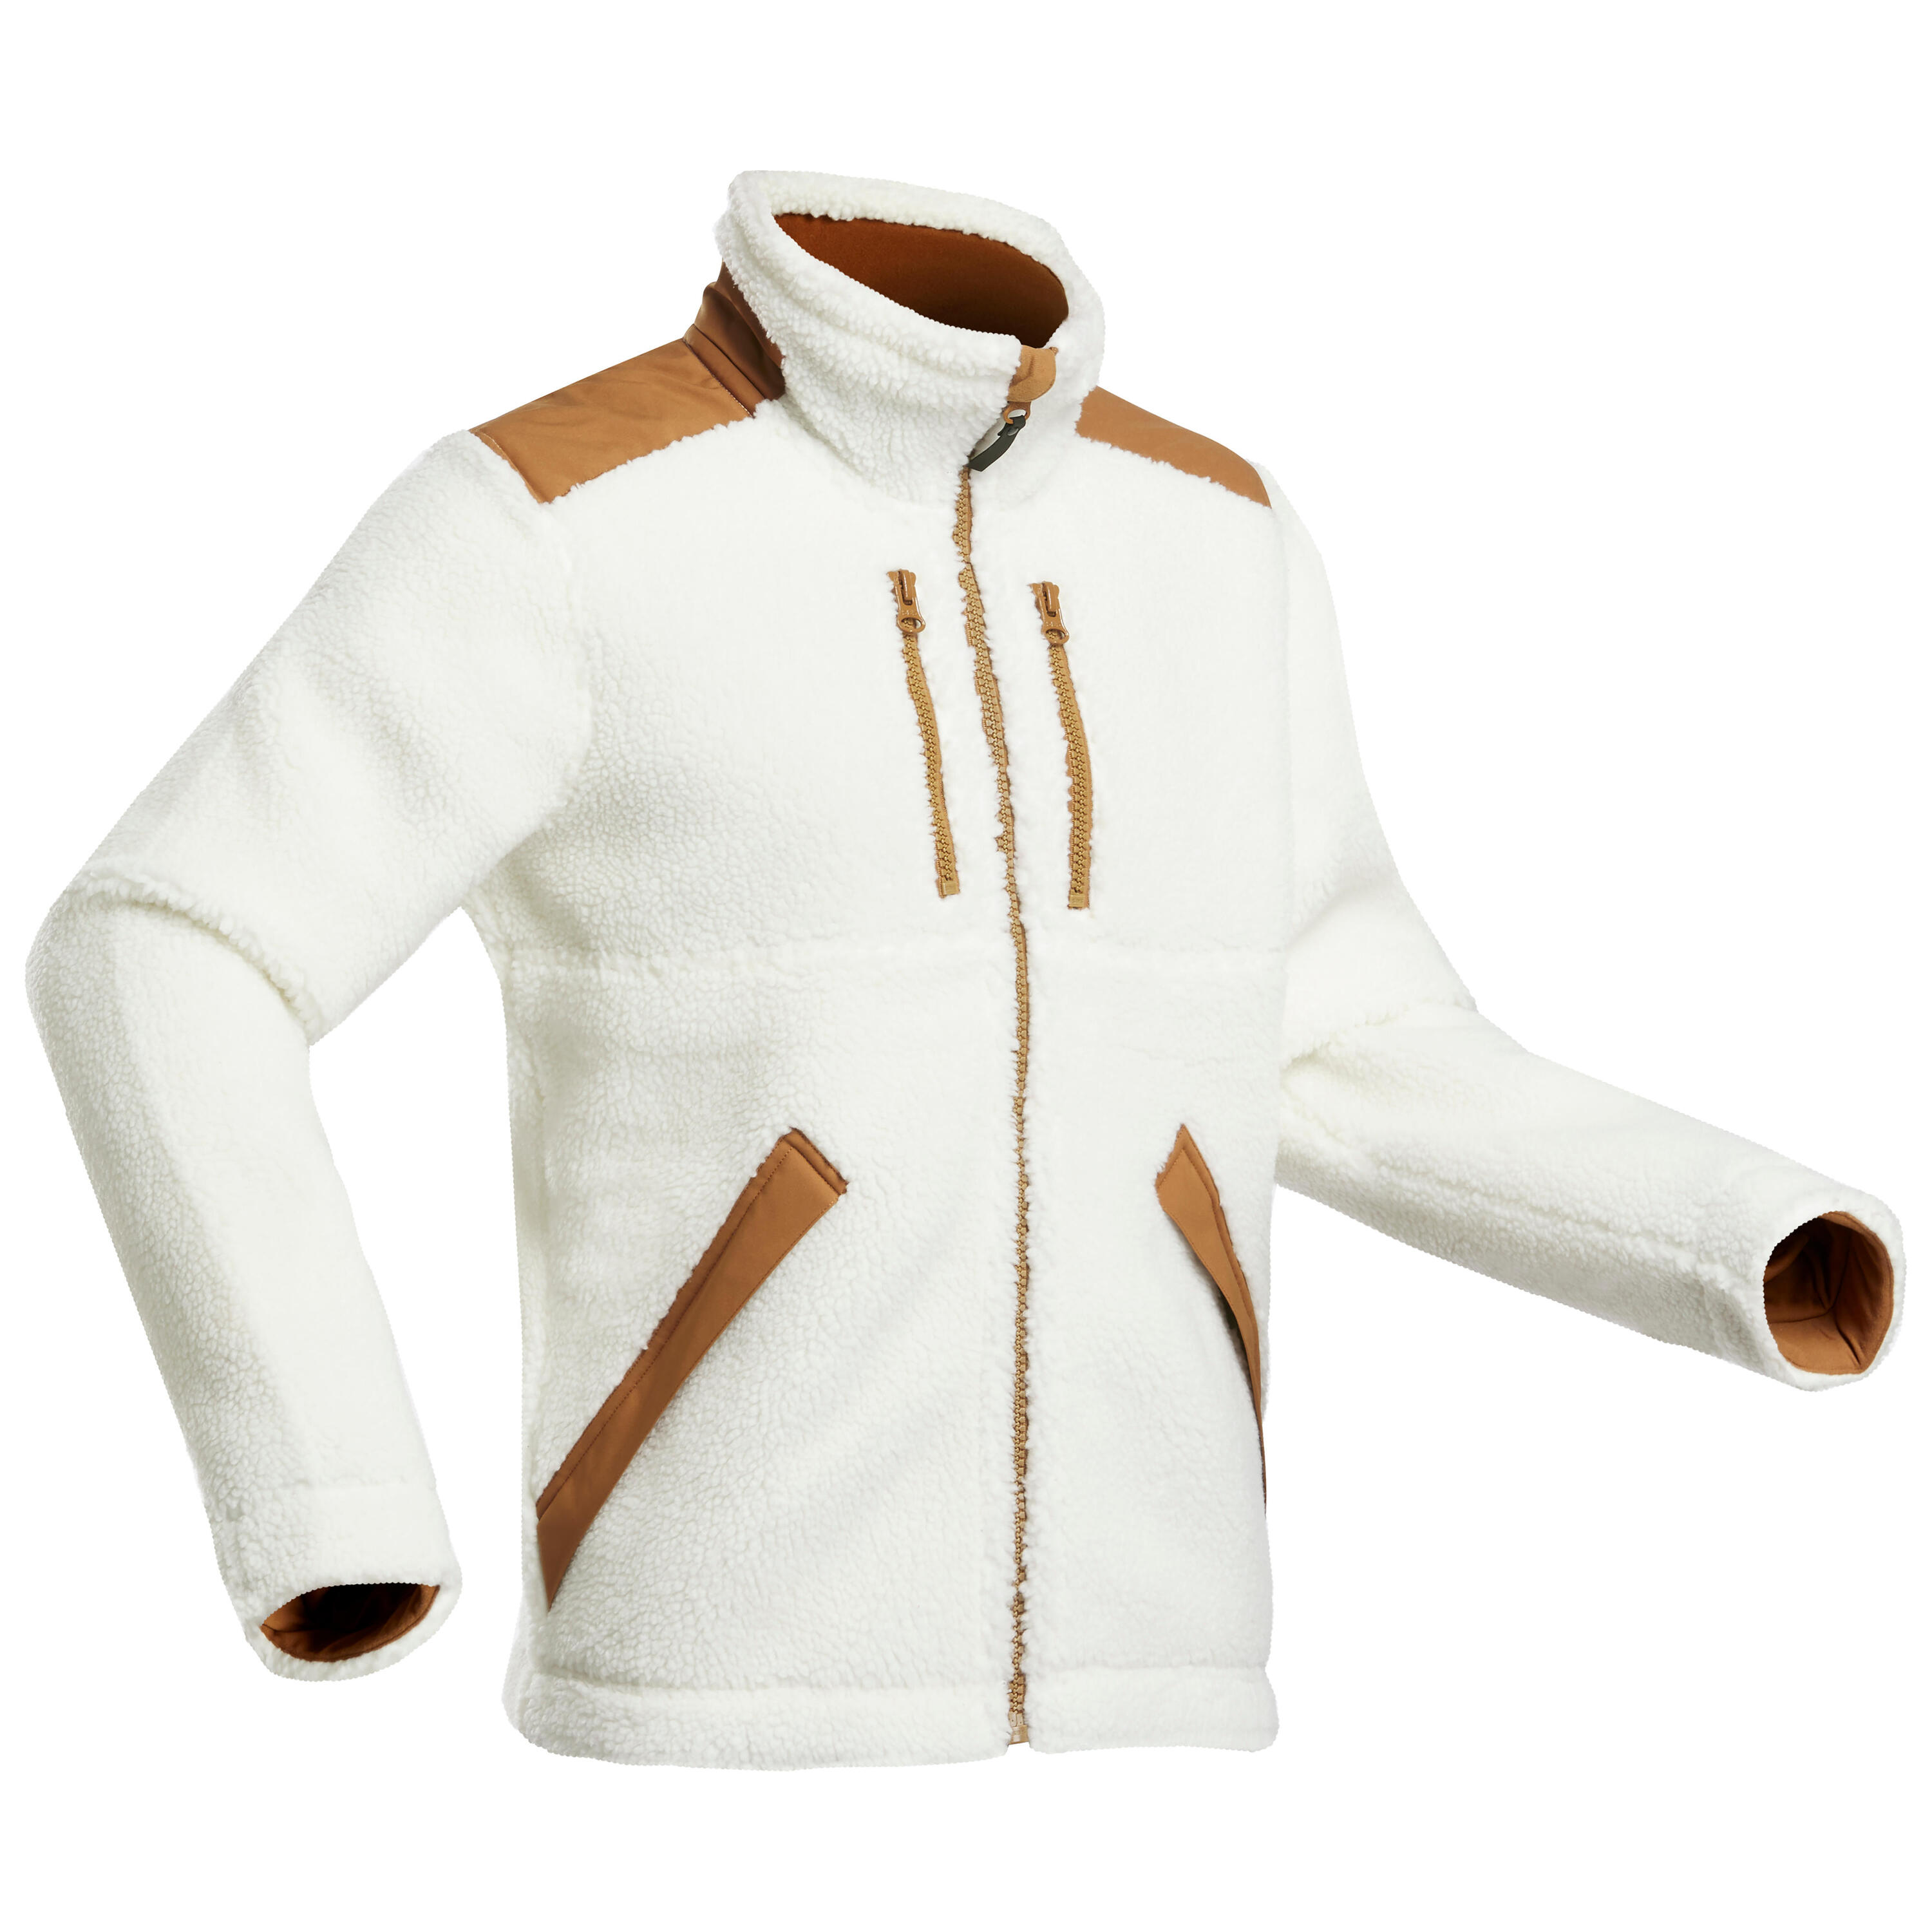 QUECHUA Men's Walking Fleece Jacket - White